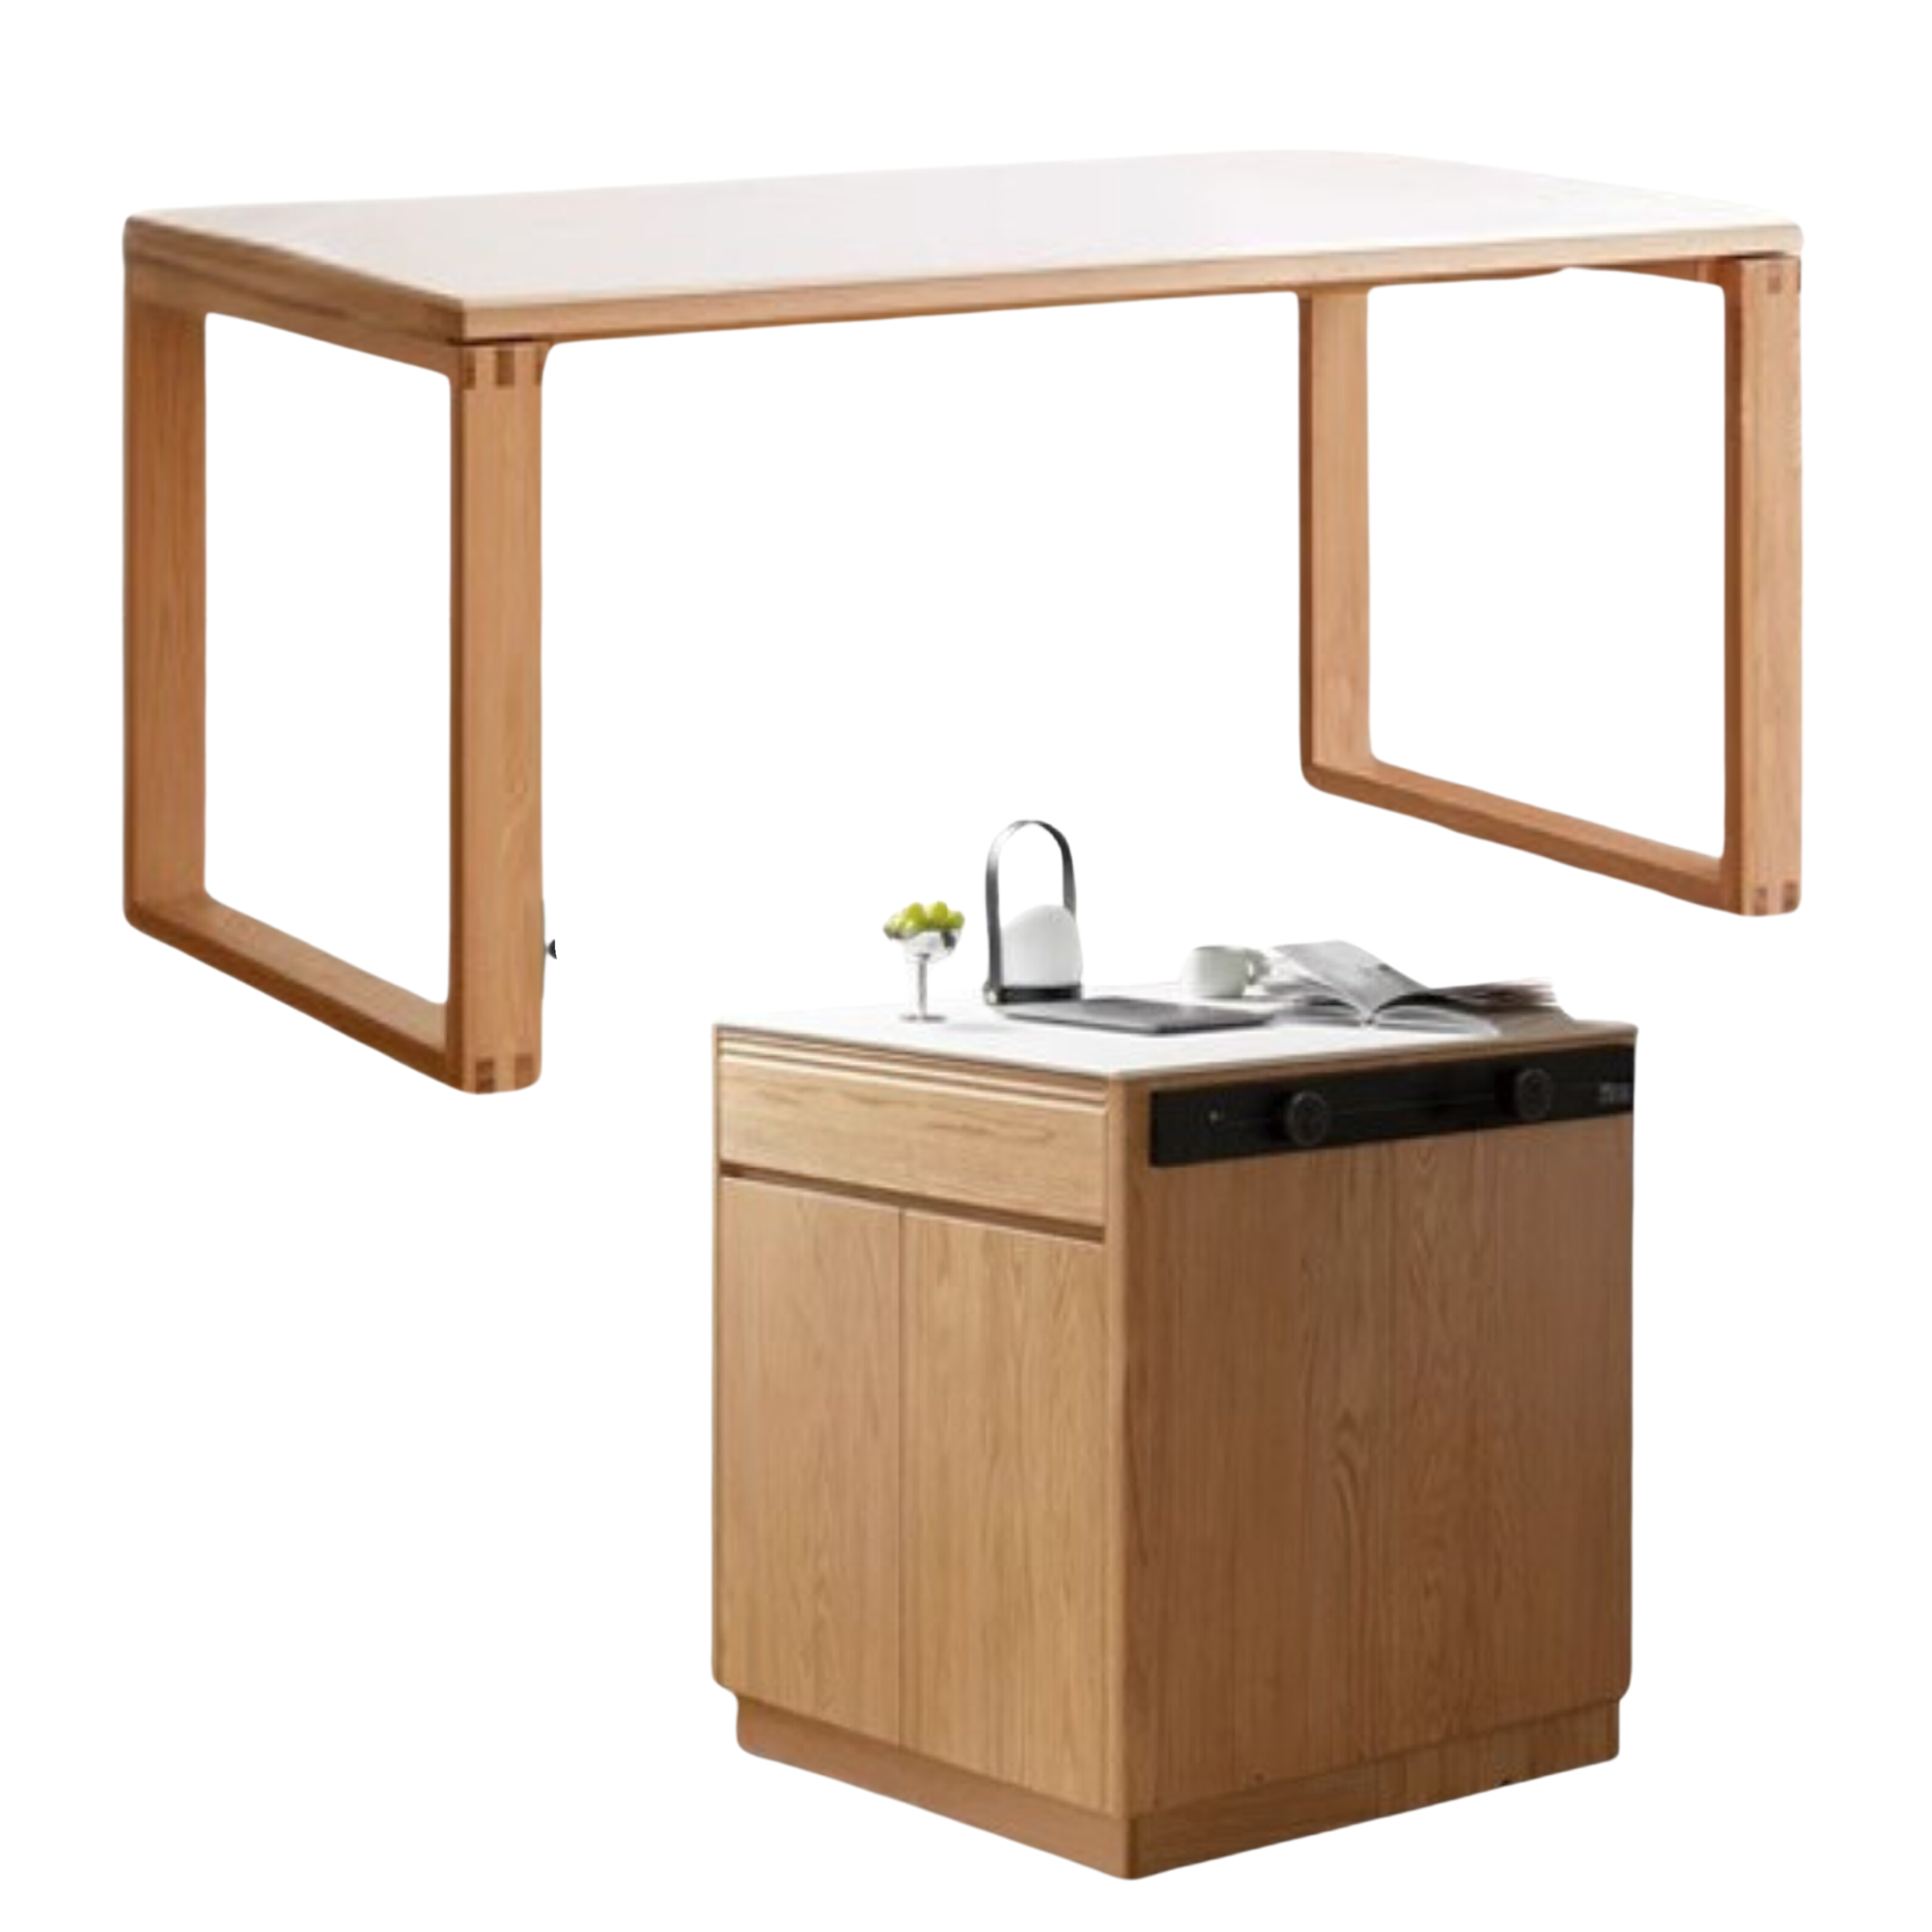 Oak solid wood rock plate island multi-functional dining sideboard"